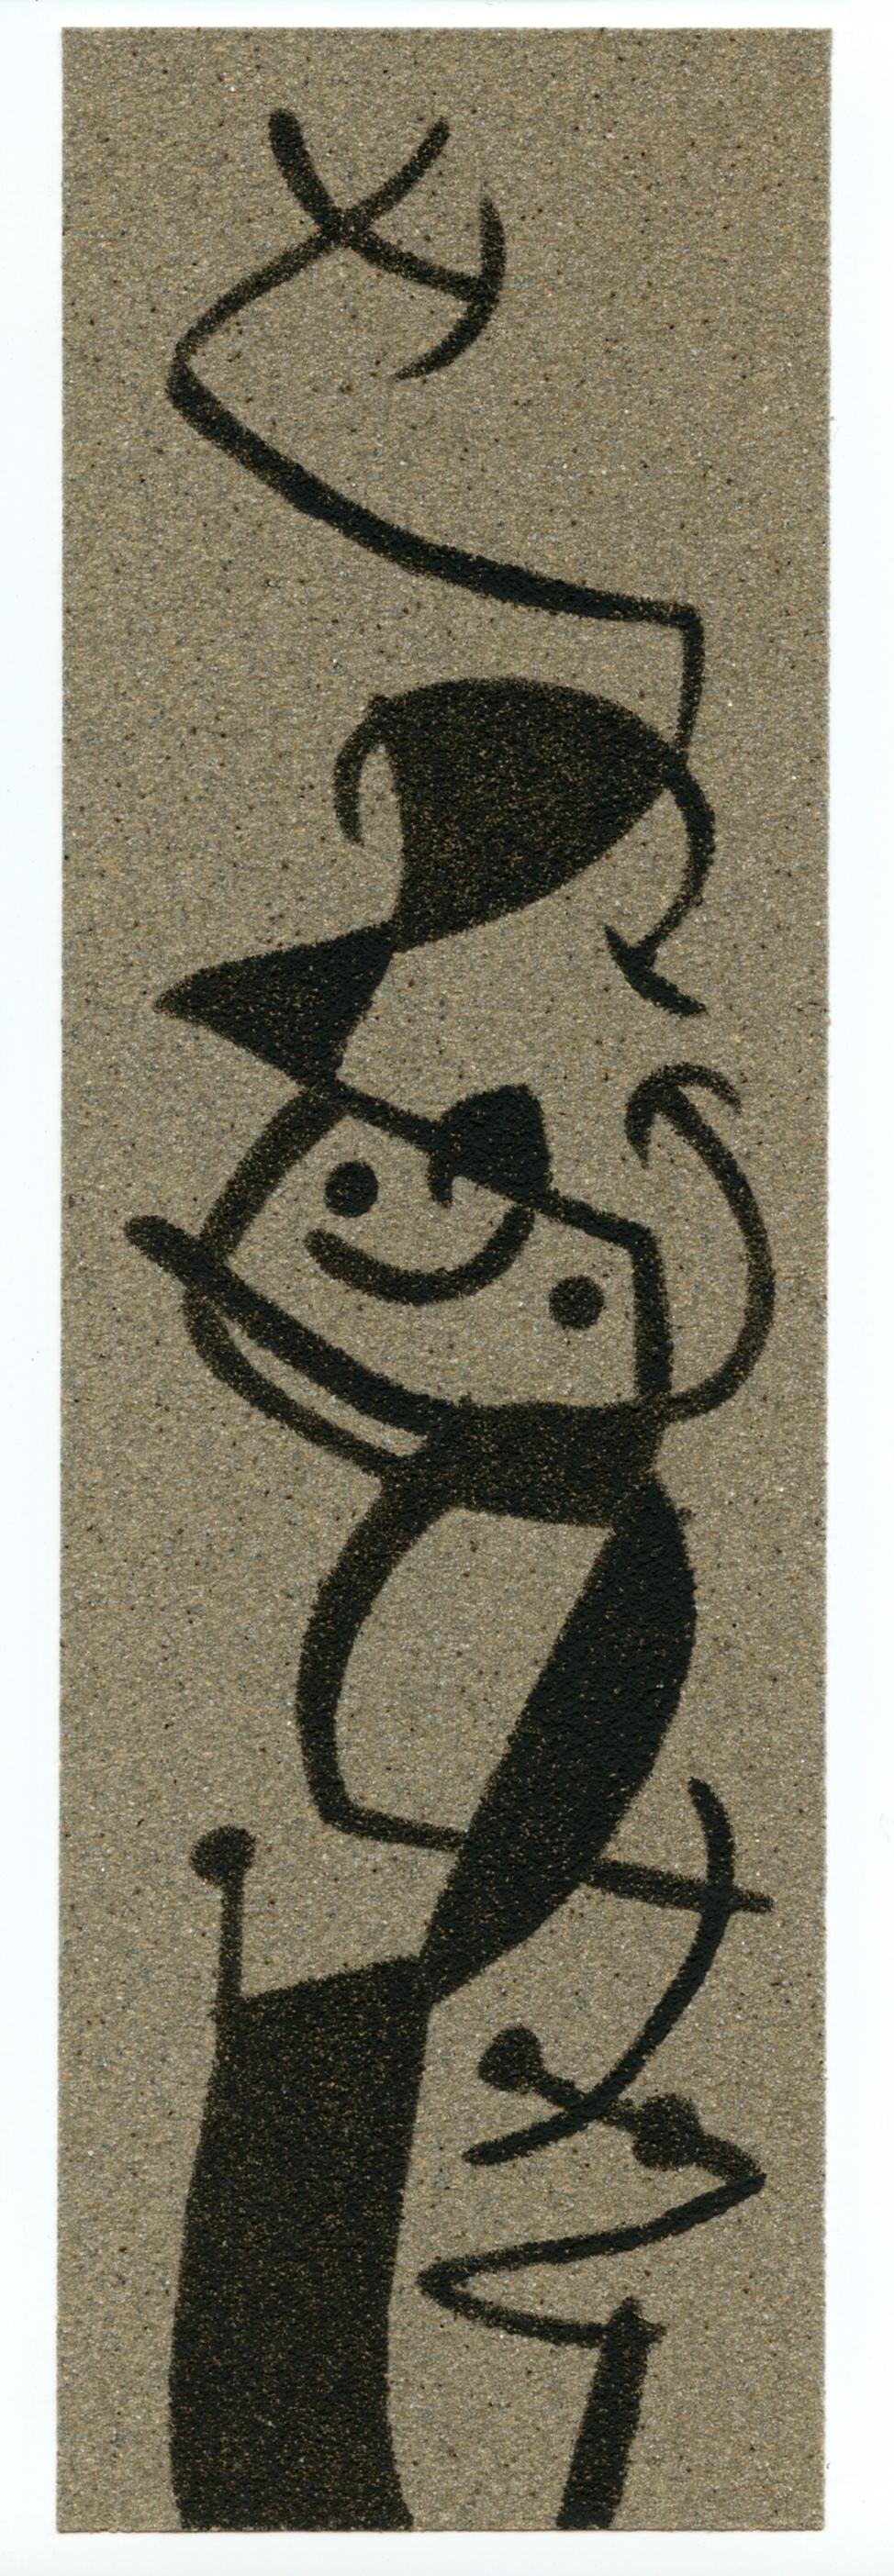 "Femme et oiseau I" pochoir on sandpaper - Print by (after) Joan Miró